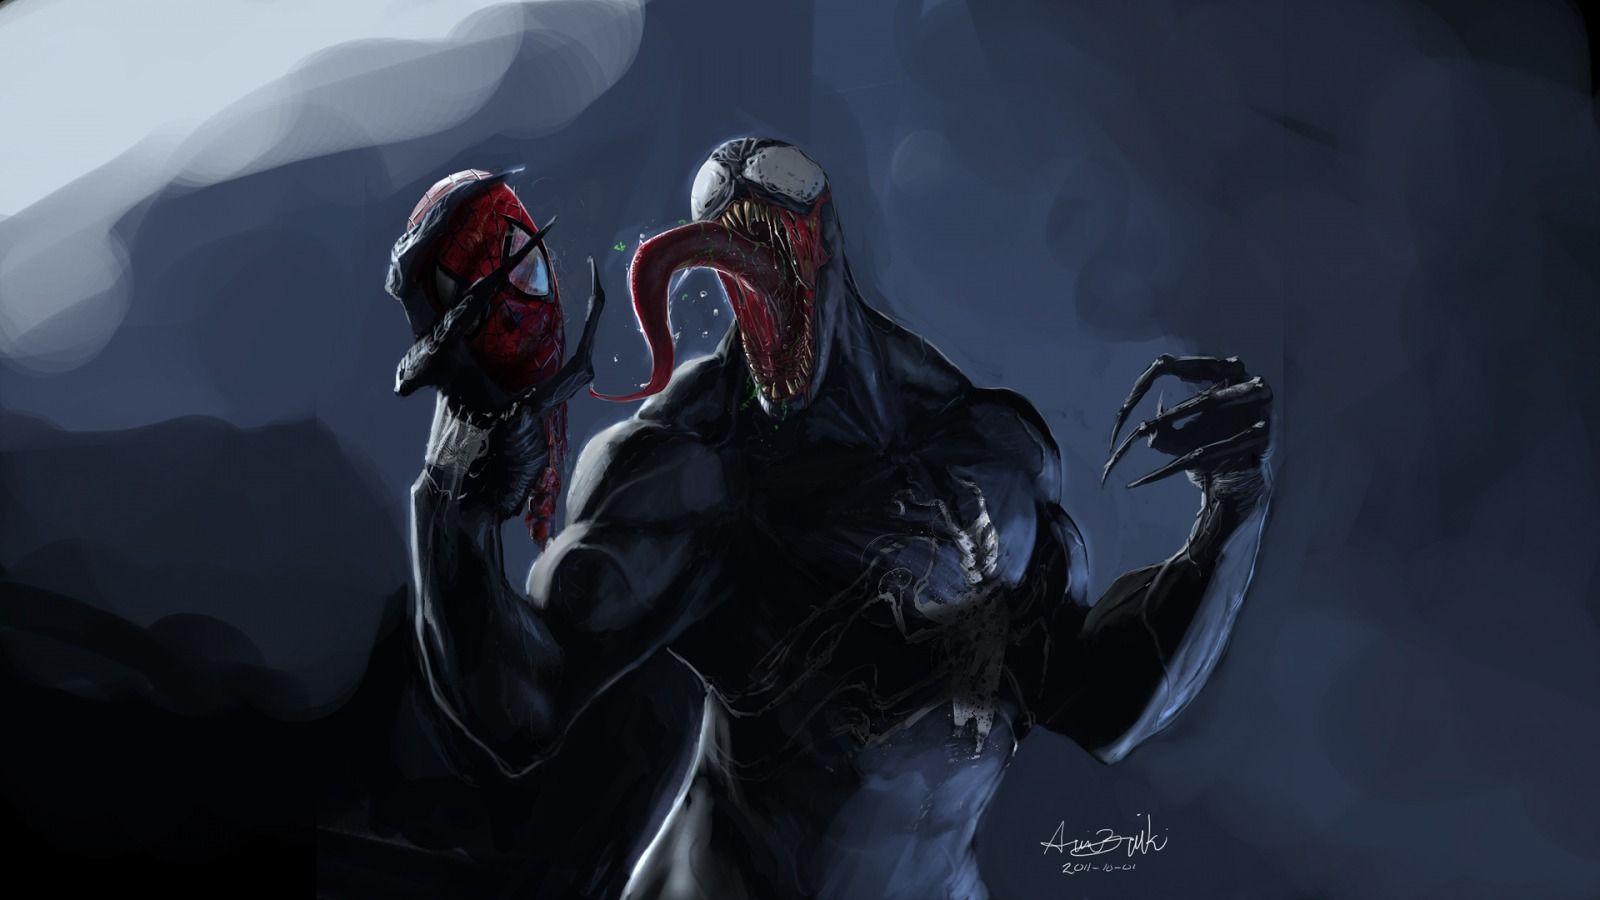 Widescreen Wallpaper of Spiderman Venom, Best Pics